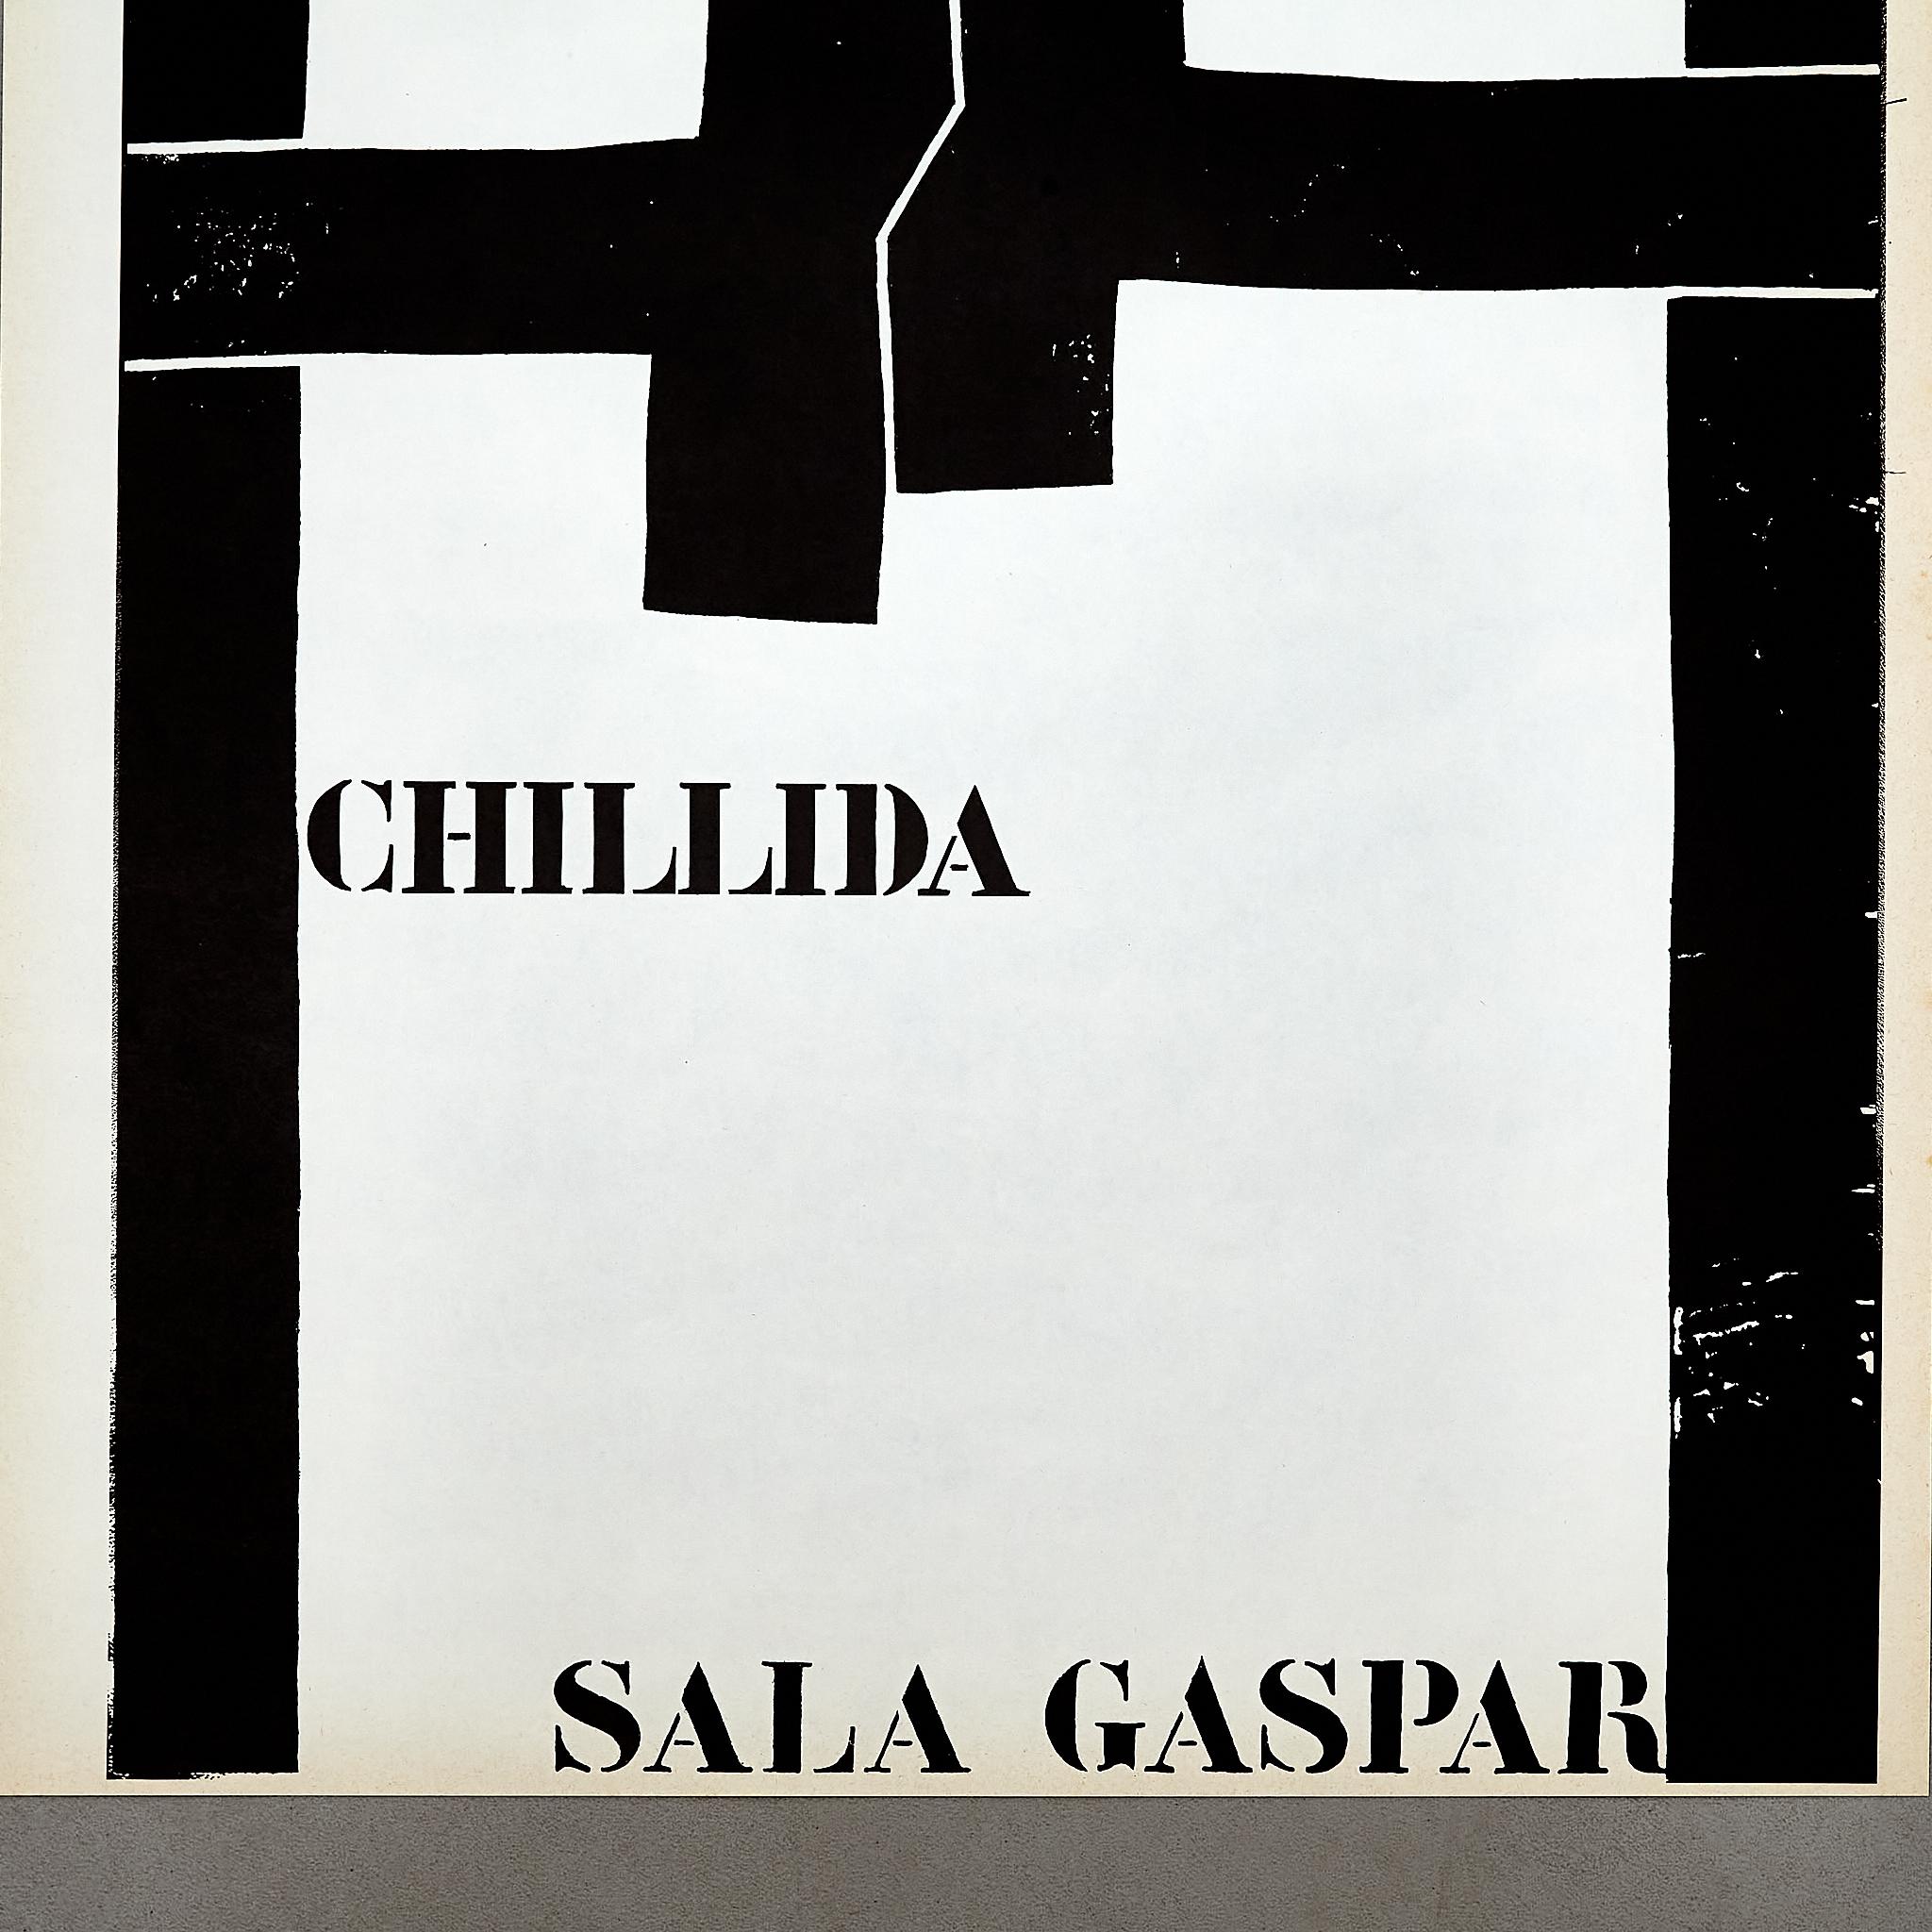 Spanish Timeless Legacy: Eduardo Chillida's Original Historic Poster for Sala Gaspar For Sale